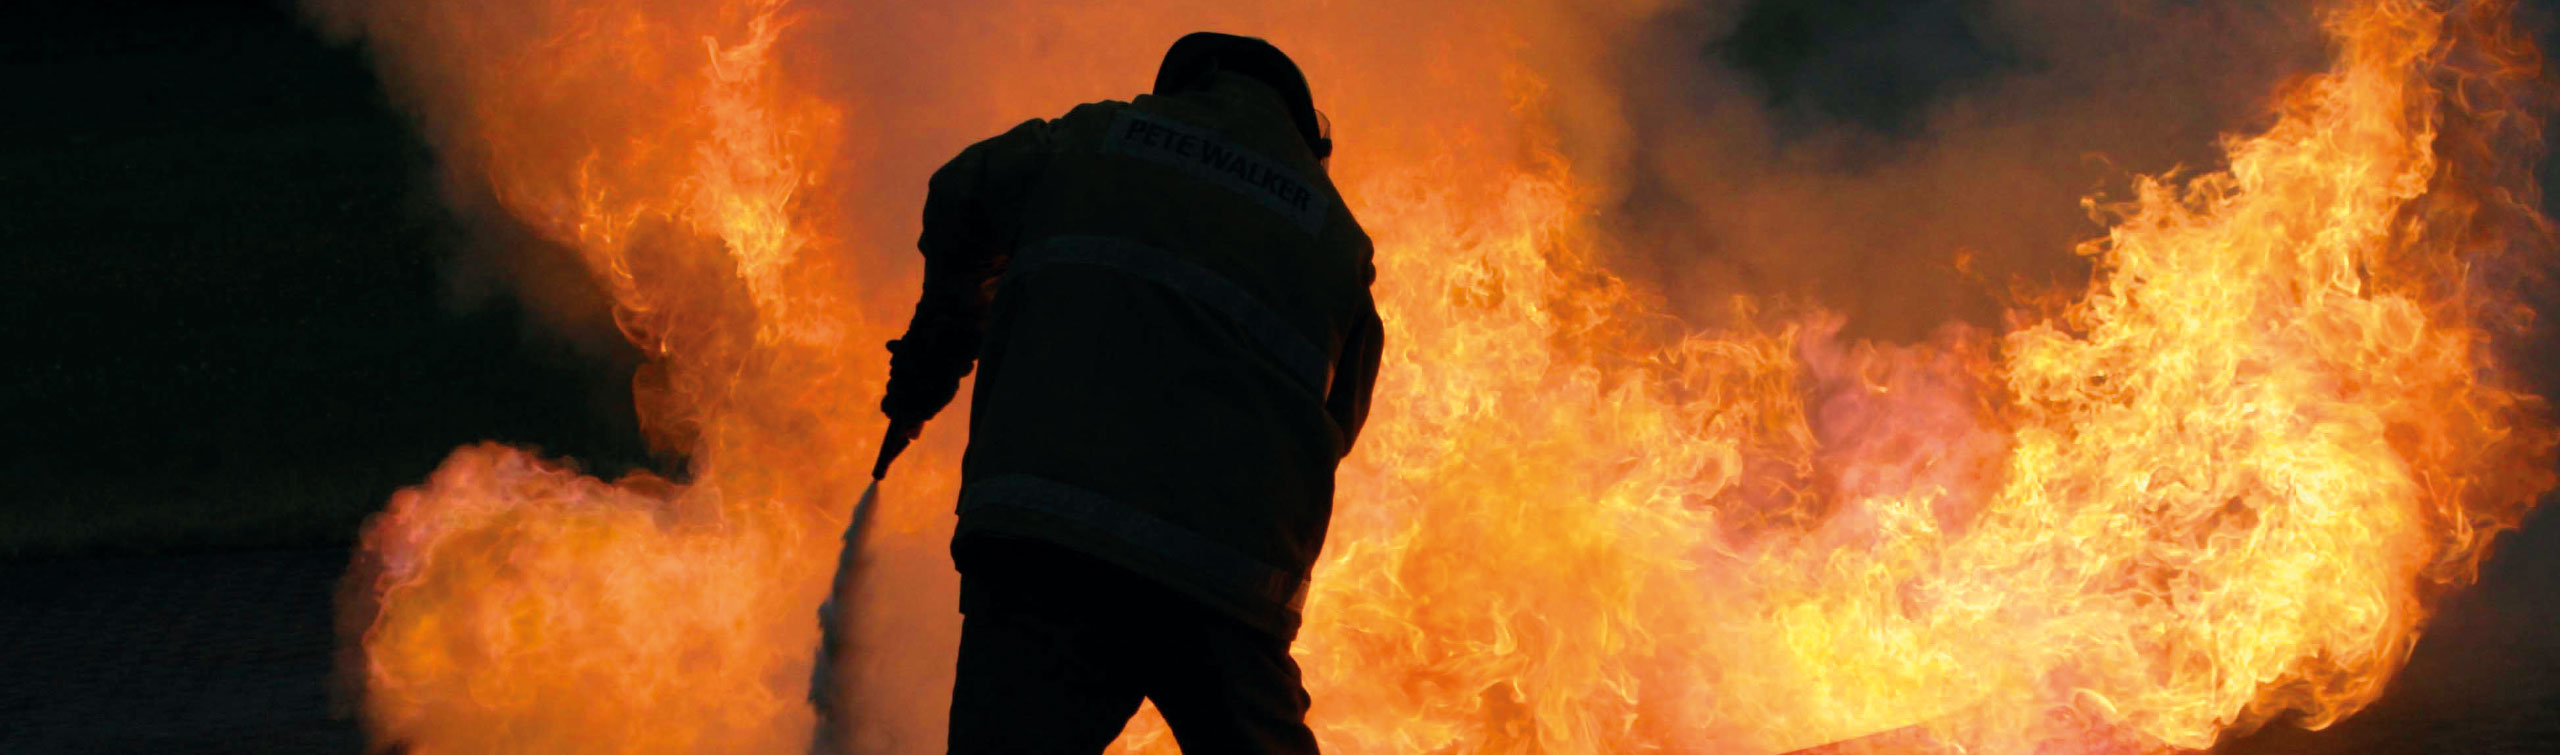 Choosing the right firefighting equipment